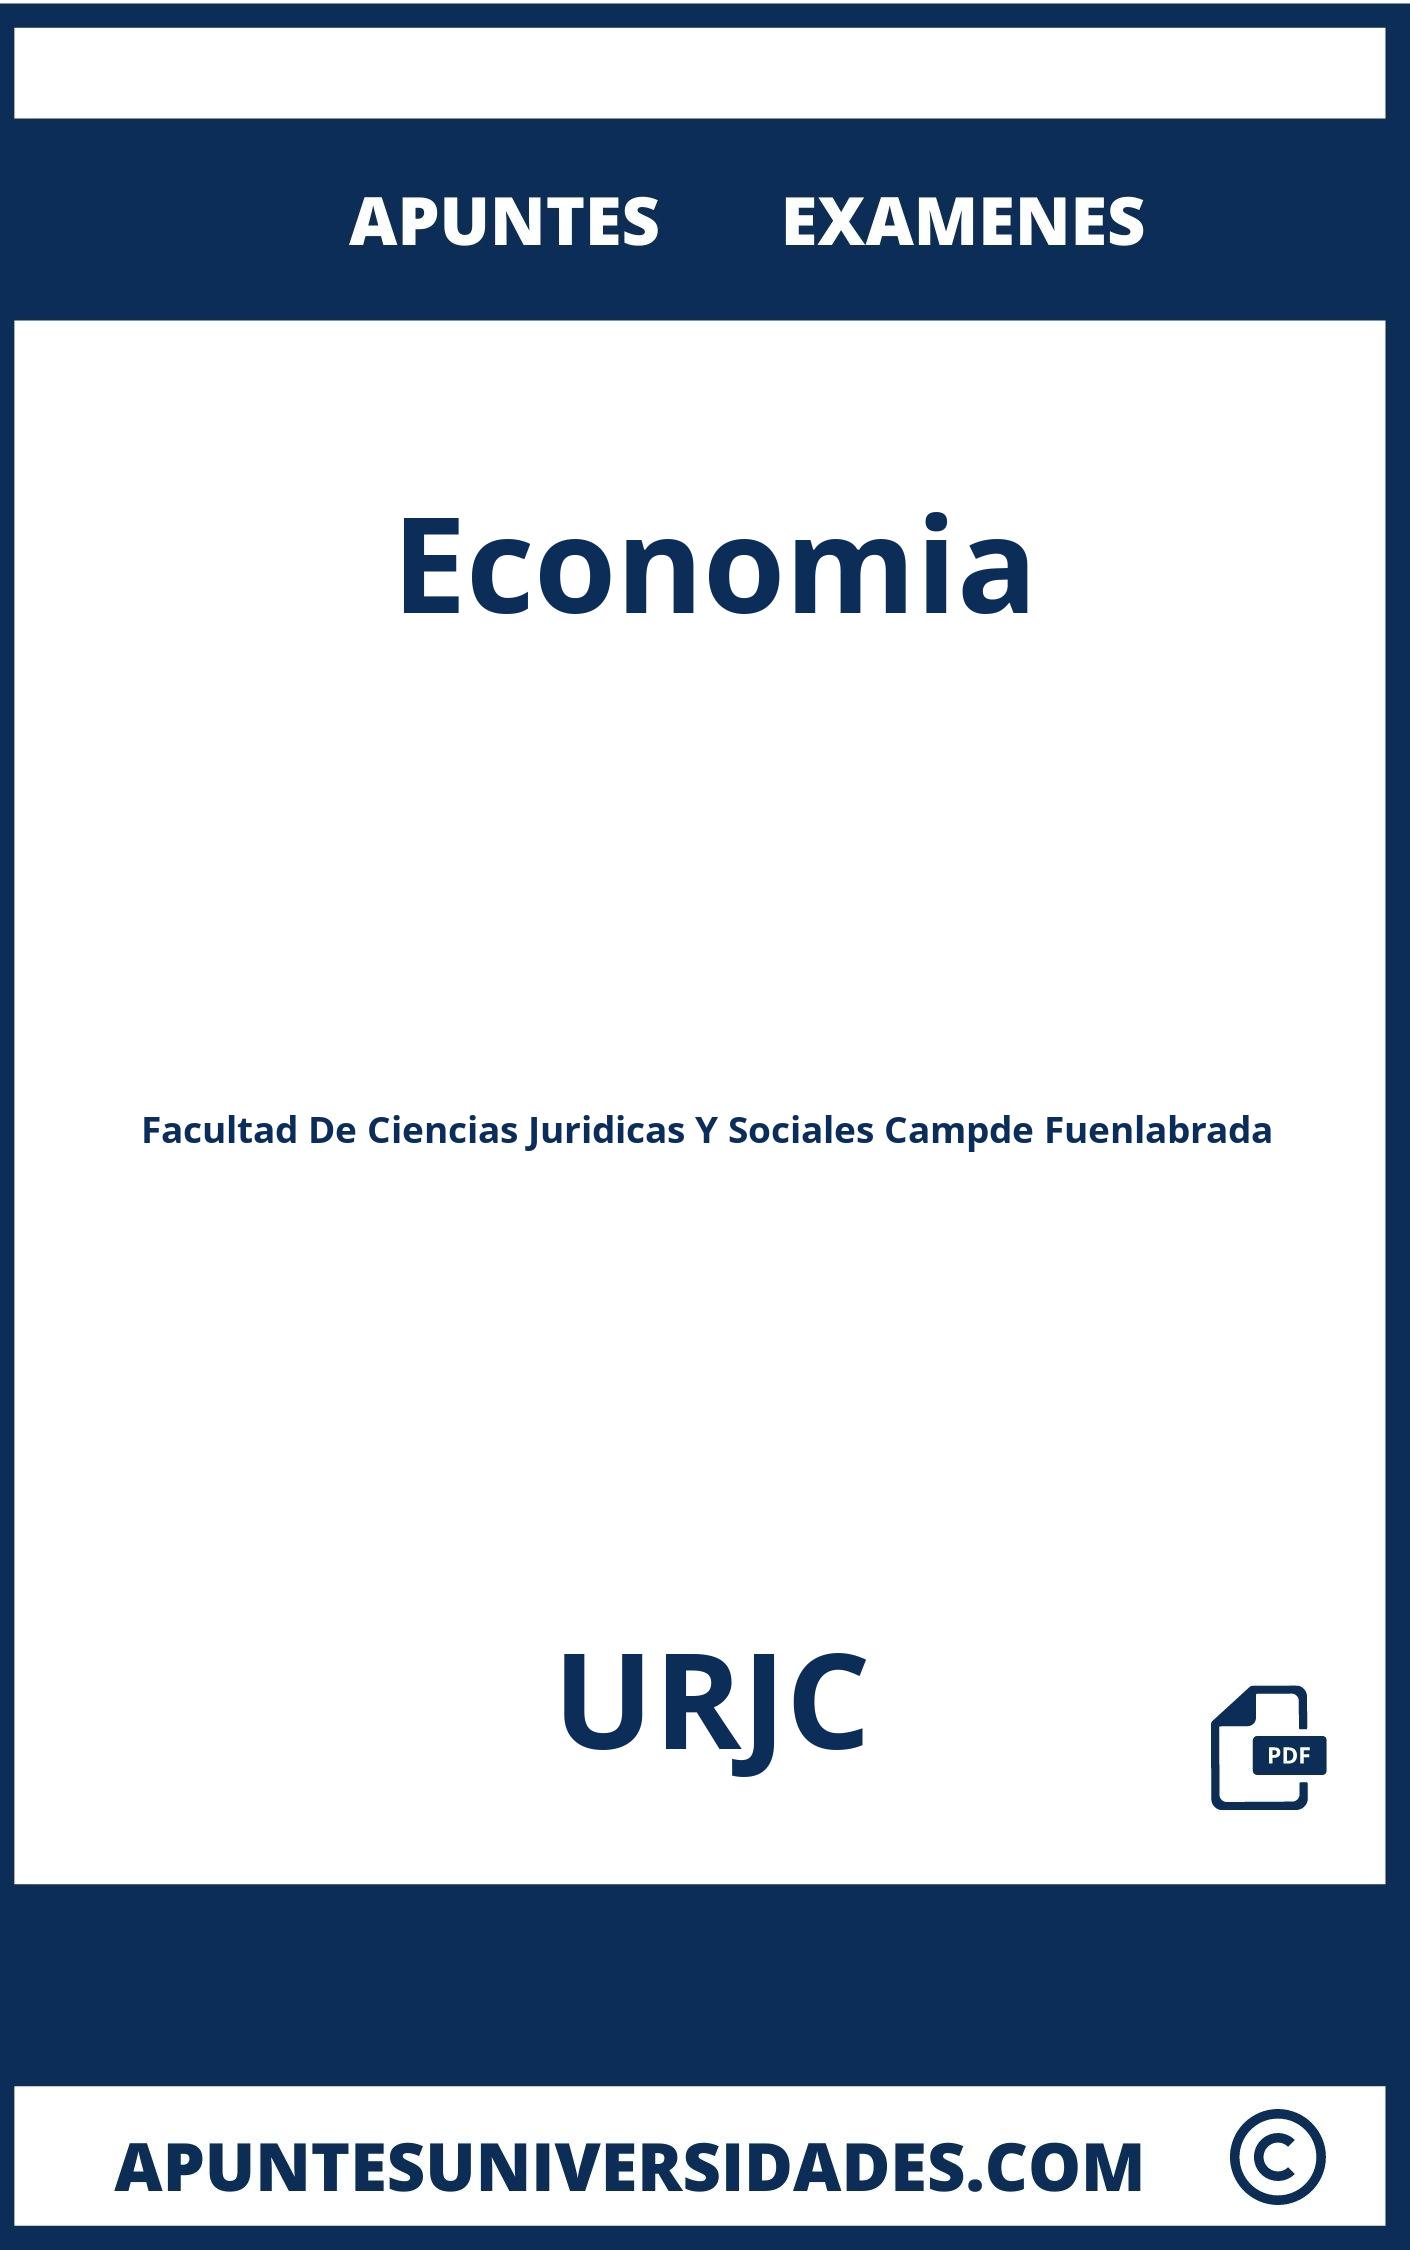 Economia URJC Examenes Apuntes